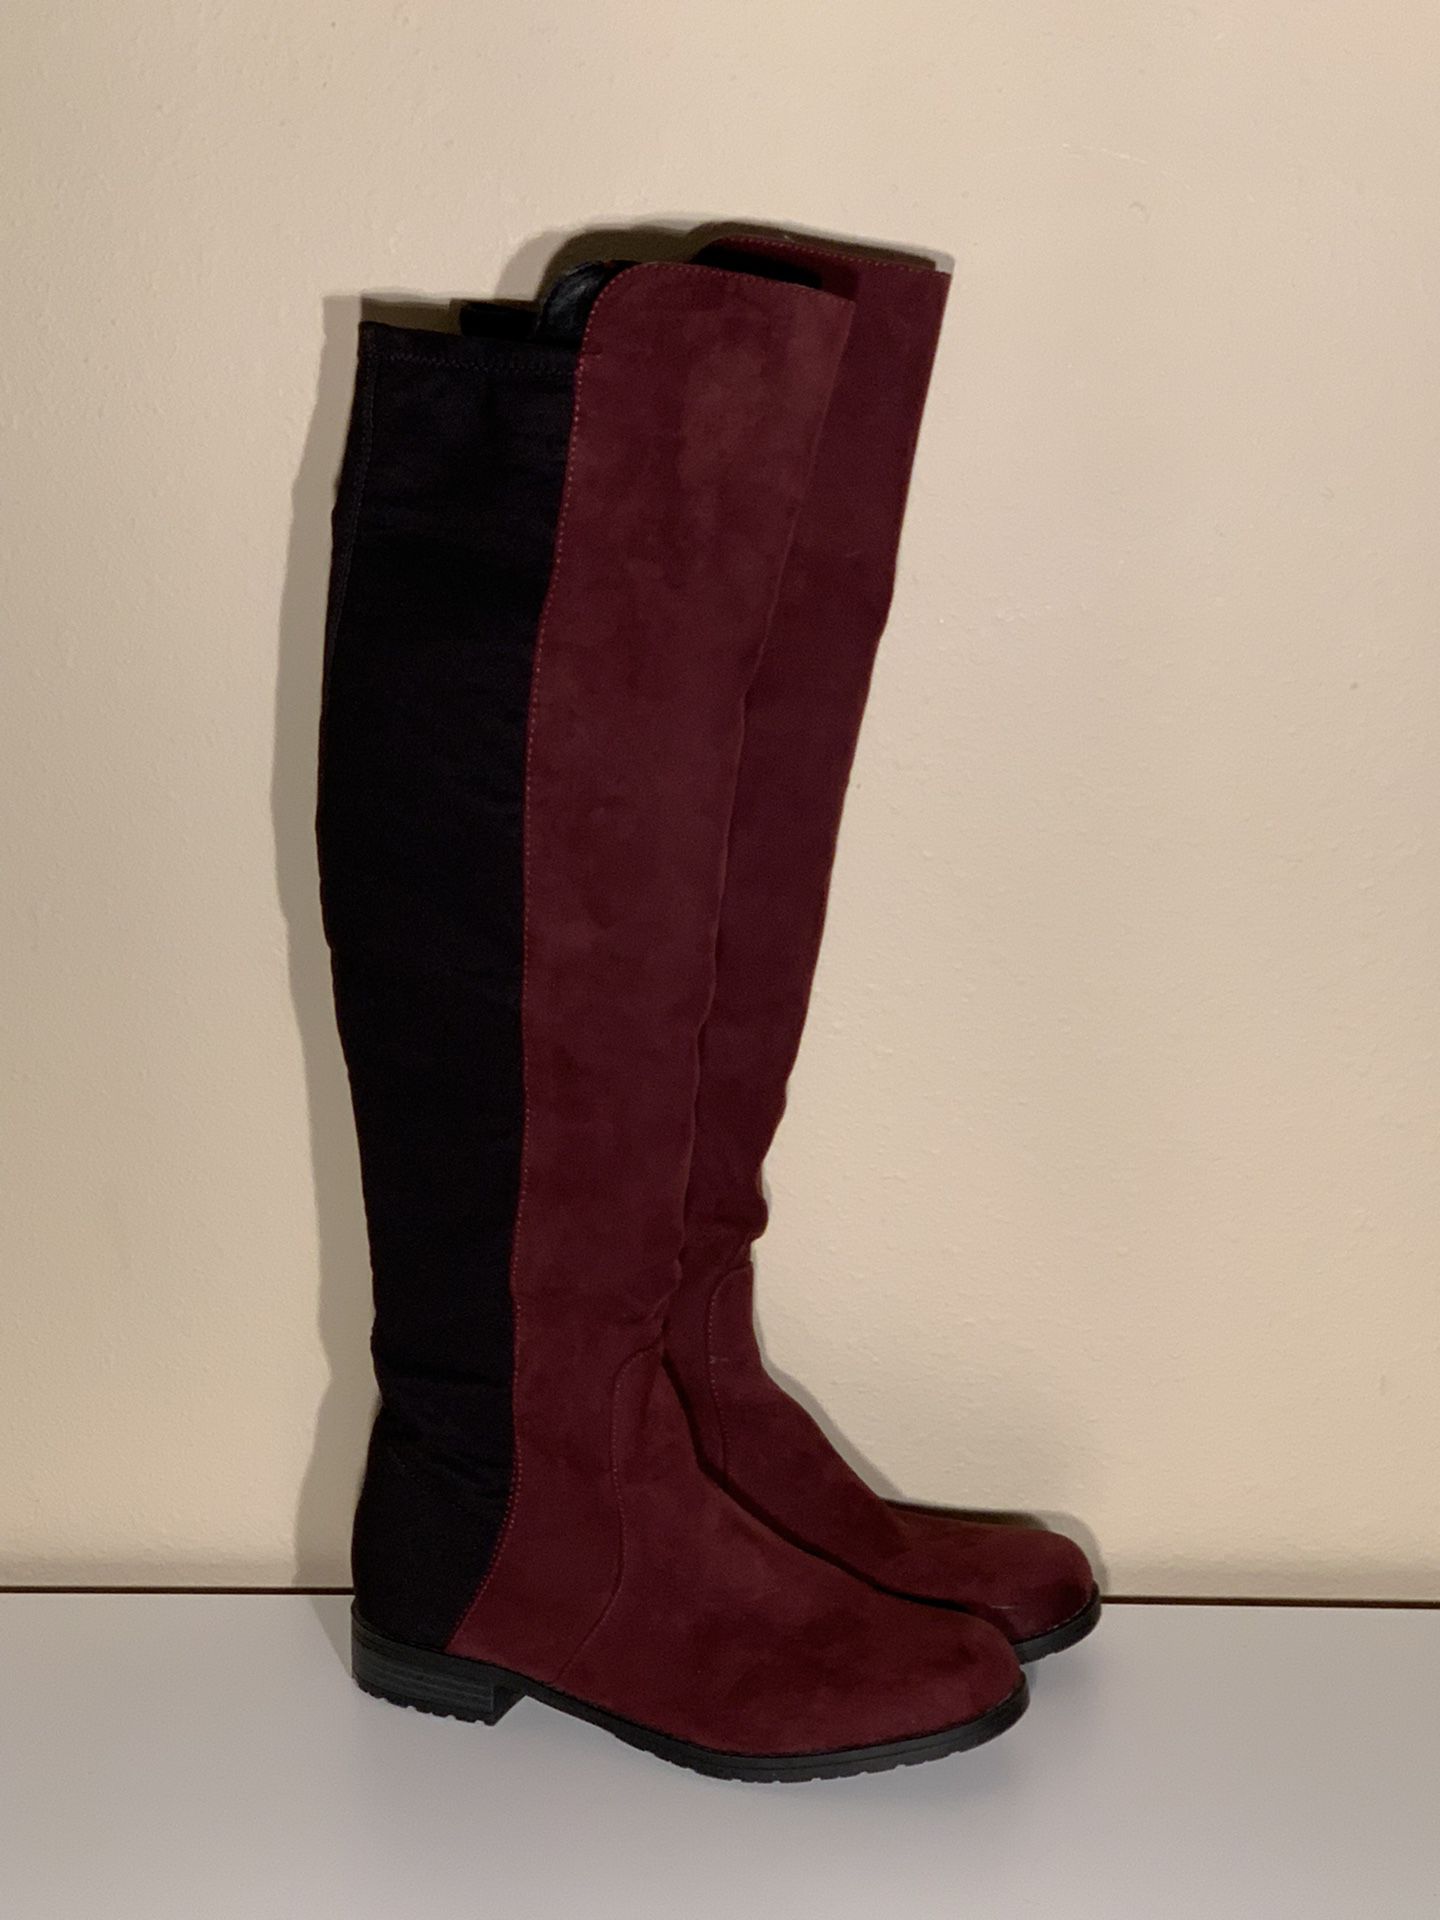 Women’s Burgundy/Black Boots Sz 7.5